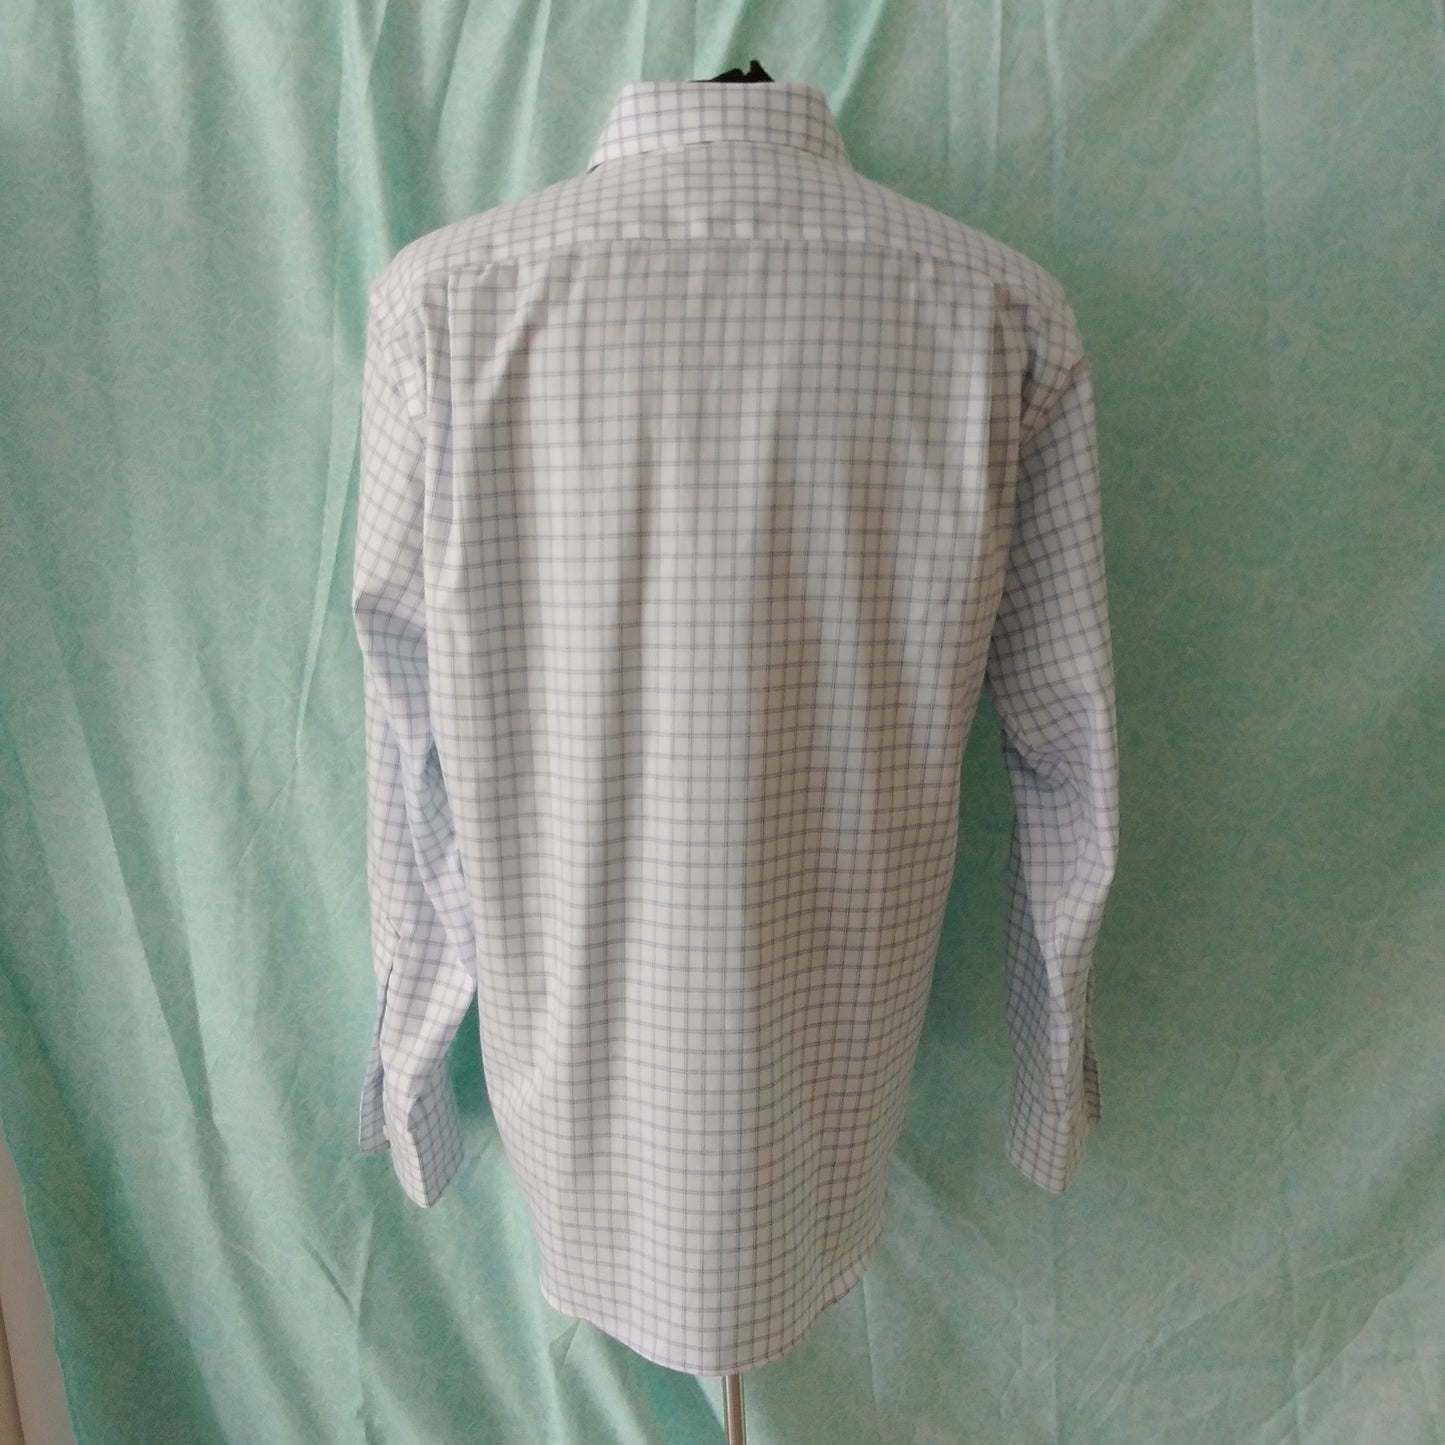 NWT - Pronto Uomo Men's Blue White Checkered Shirt - 16.5 34/35